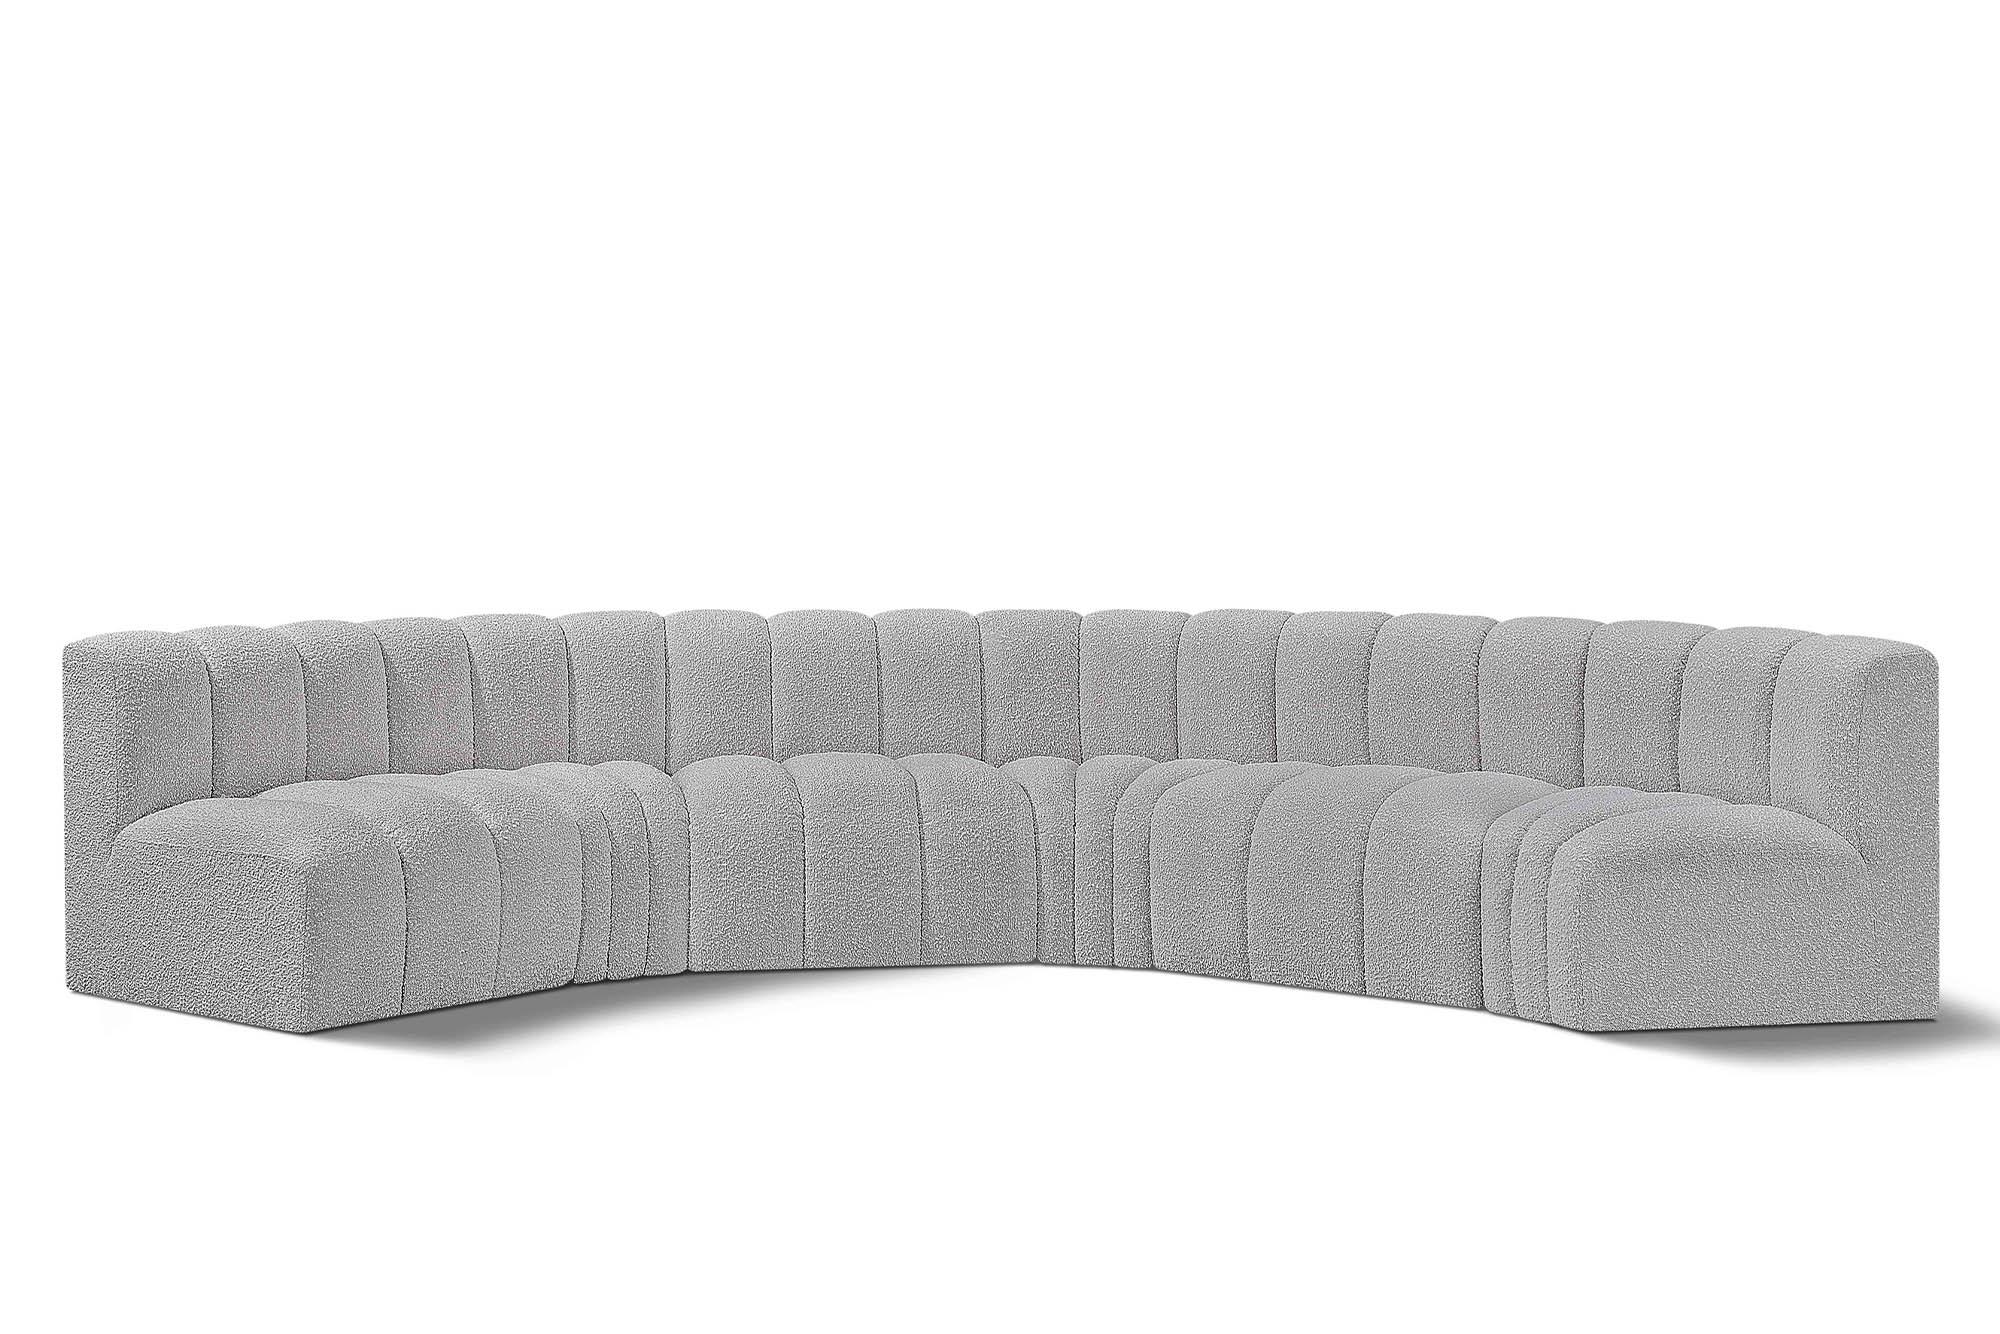 Contemporary, Modern Modular Sectional Sofa ARC 102Grey-S6B 102Grey-S6B in Gray 